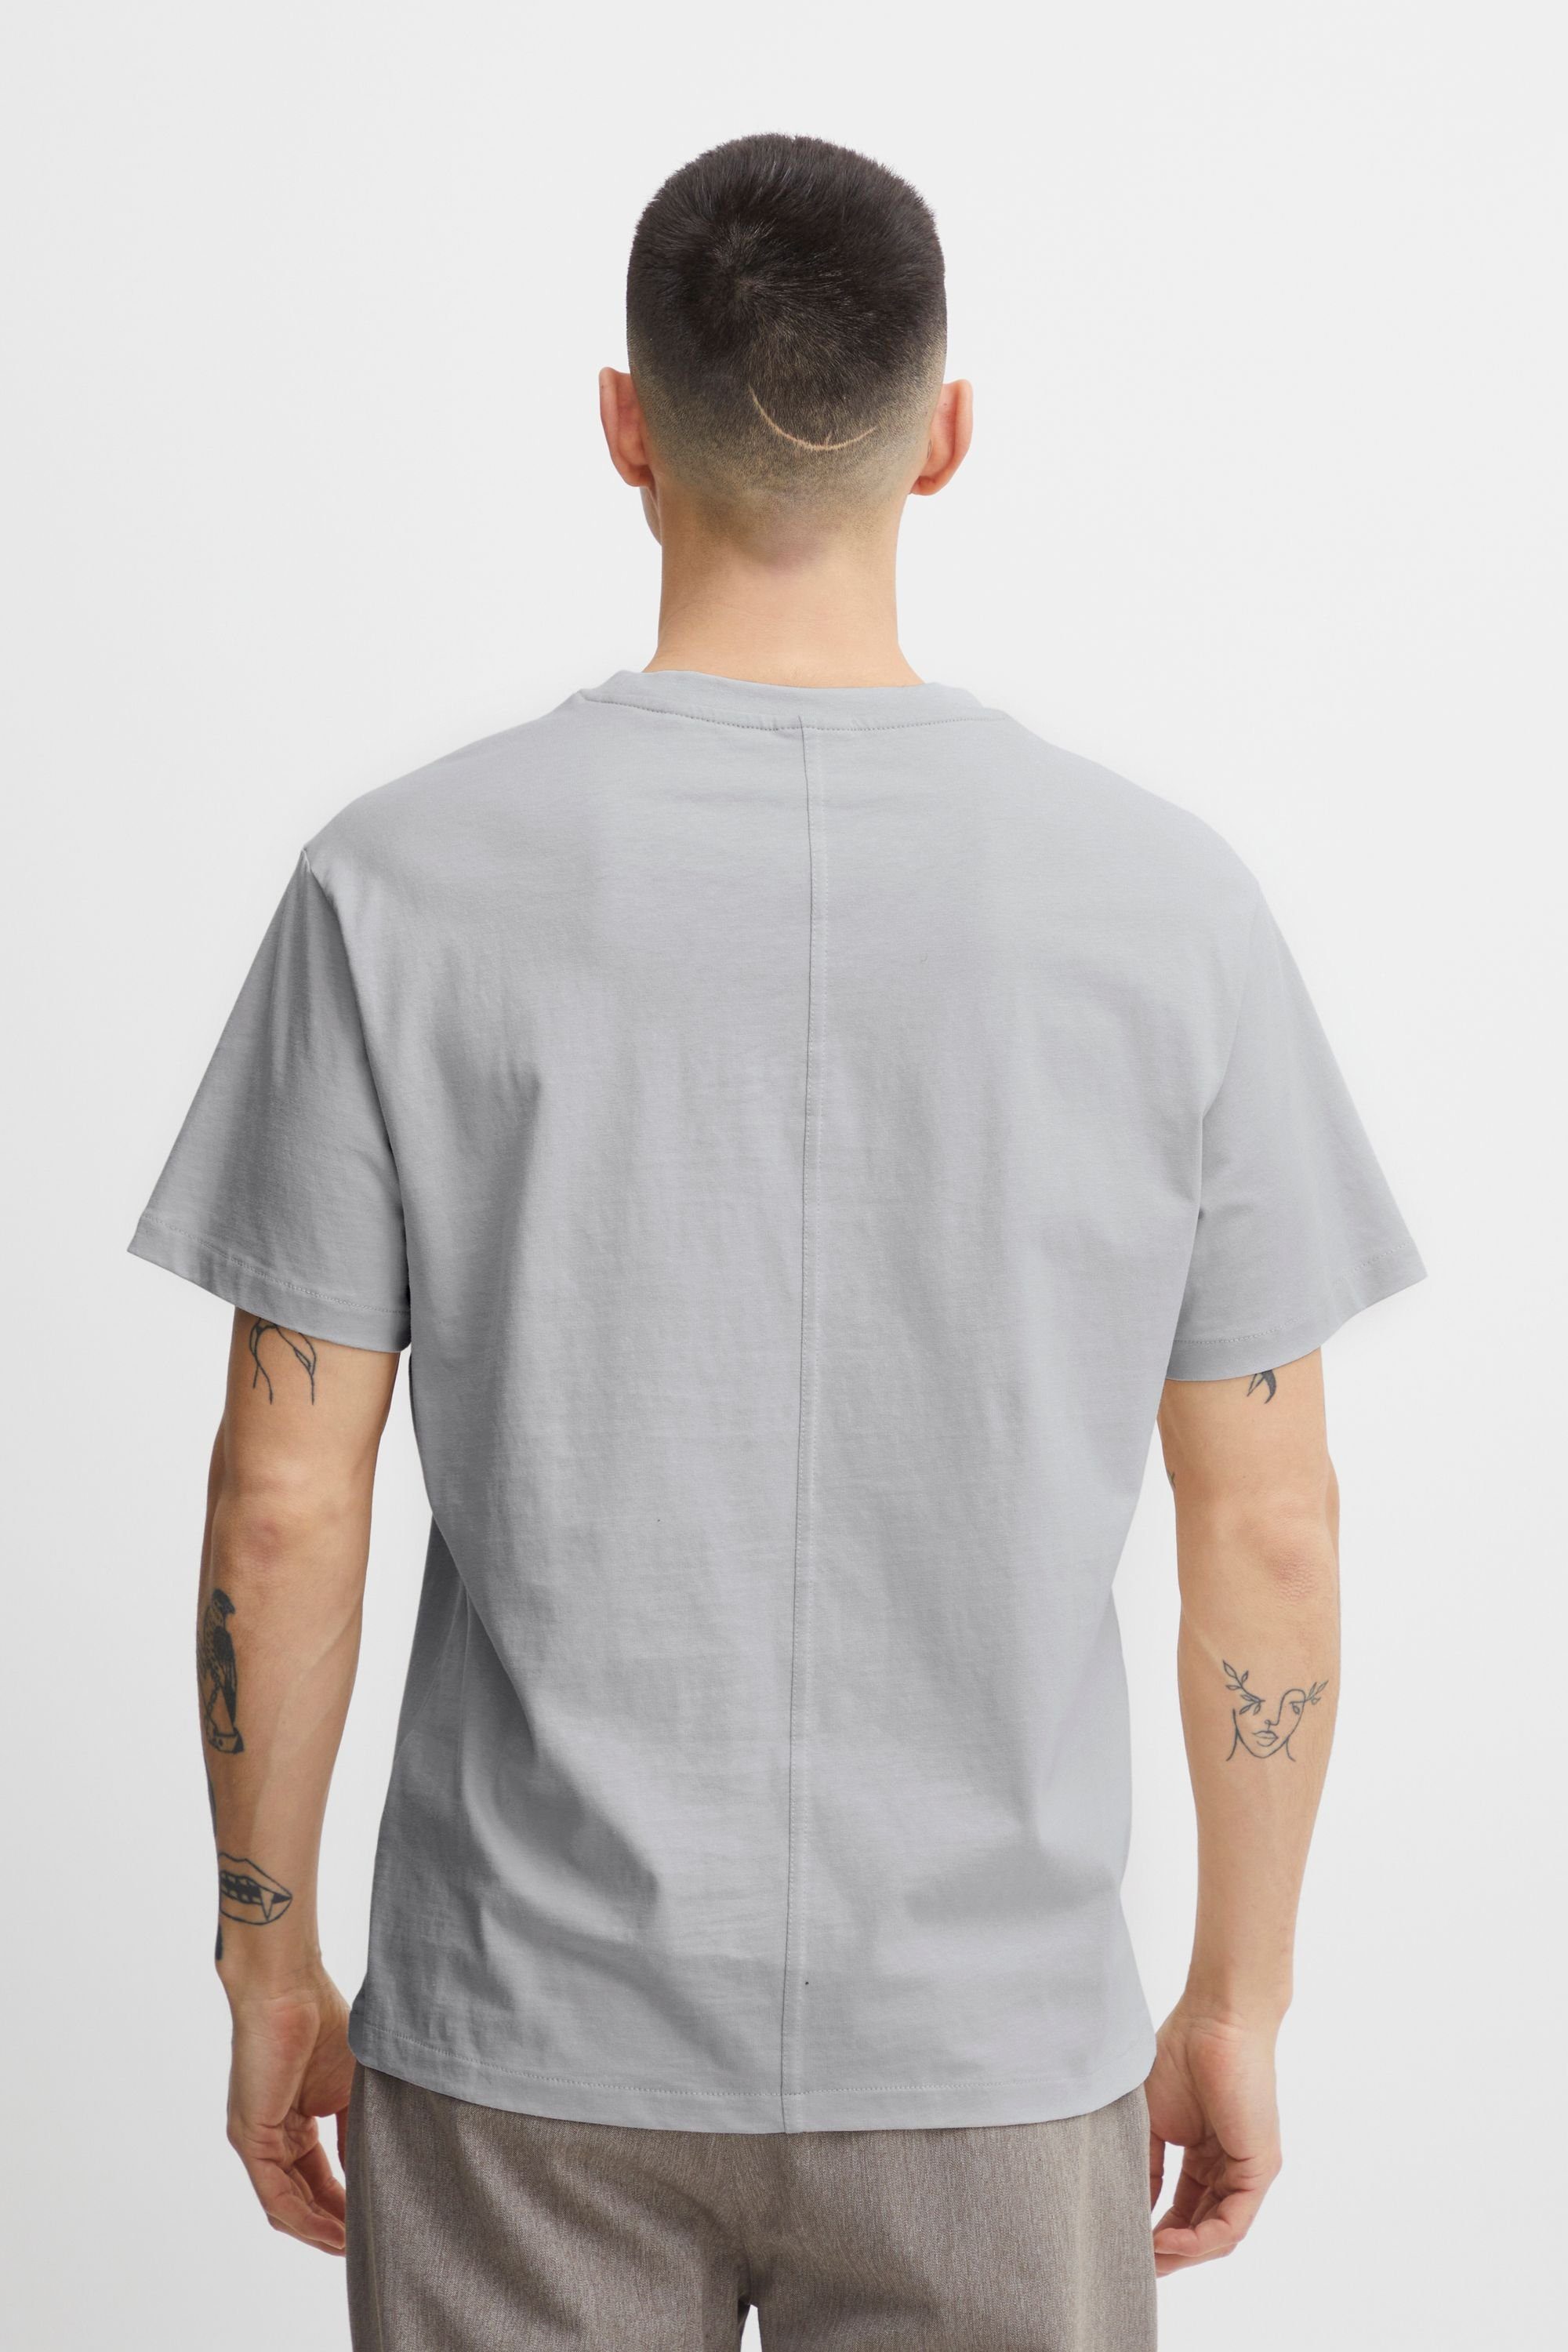 Grey 21107195 !Solid Melange SDCadel SS T-Shirt Light (1541011)